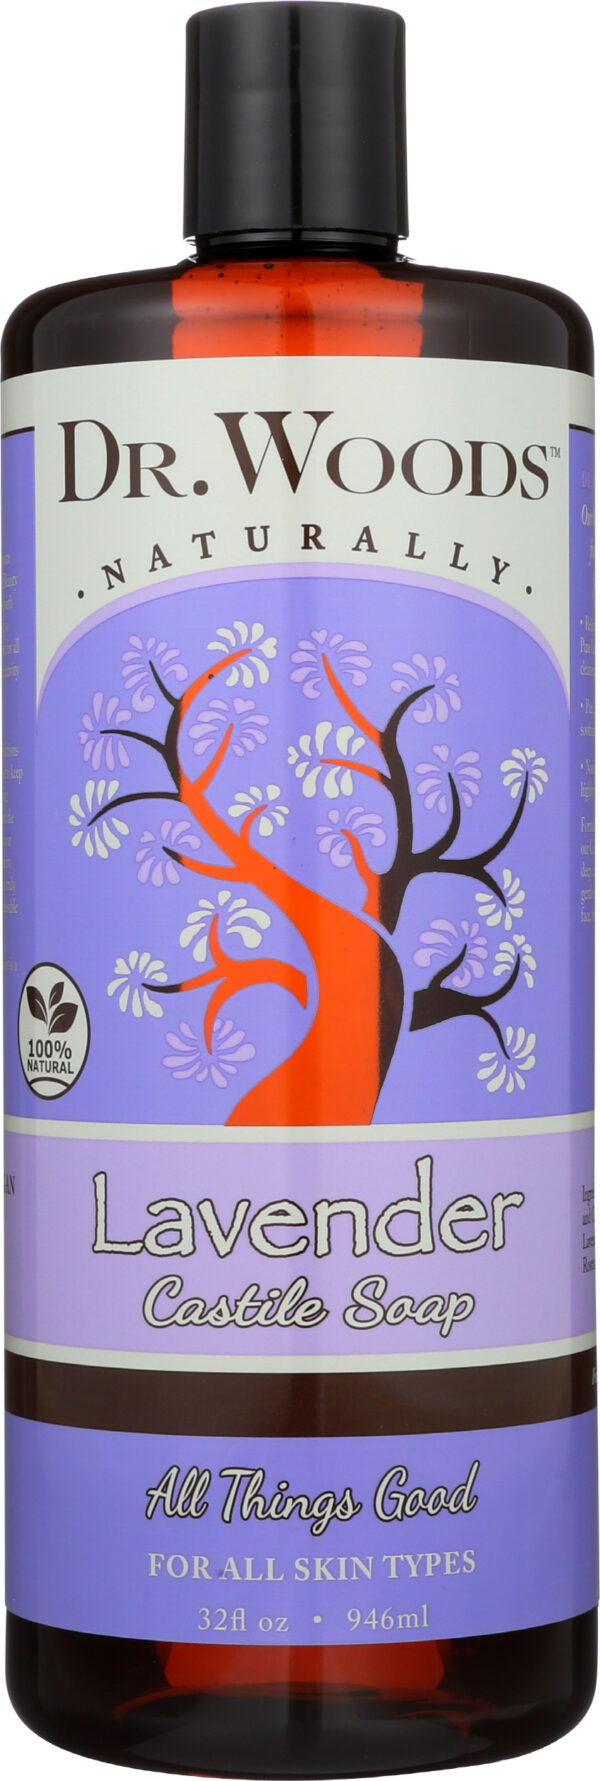 Lavender Castile Soap – 32 FL OZ